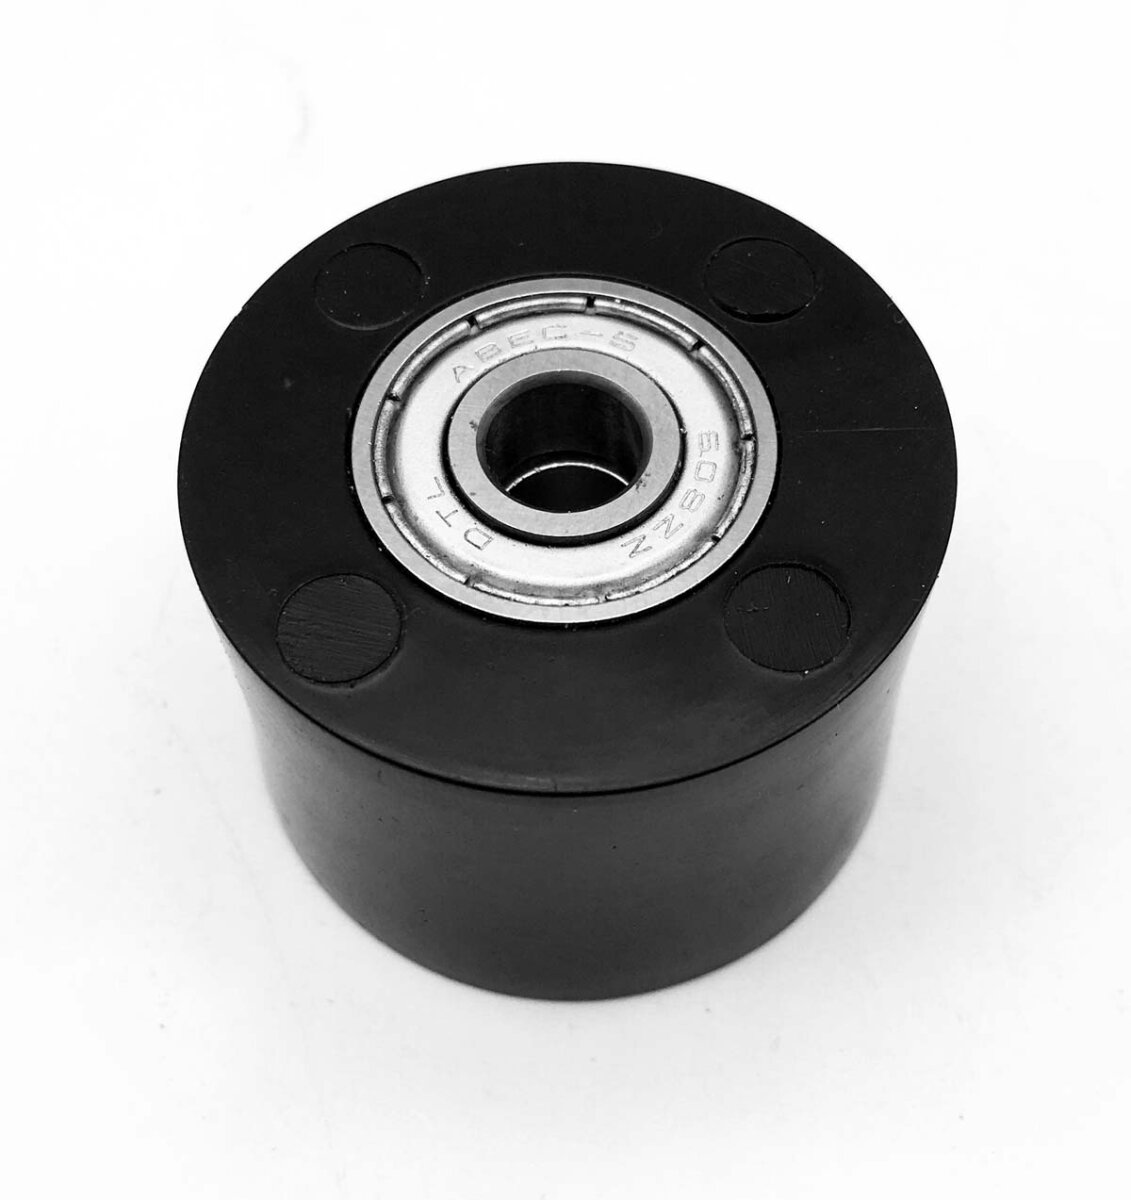 Kettenrolle schwarz, kugelgelagert, Aussendurchm. 40mm, 11,99 €